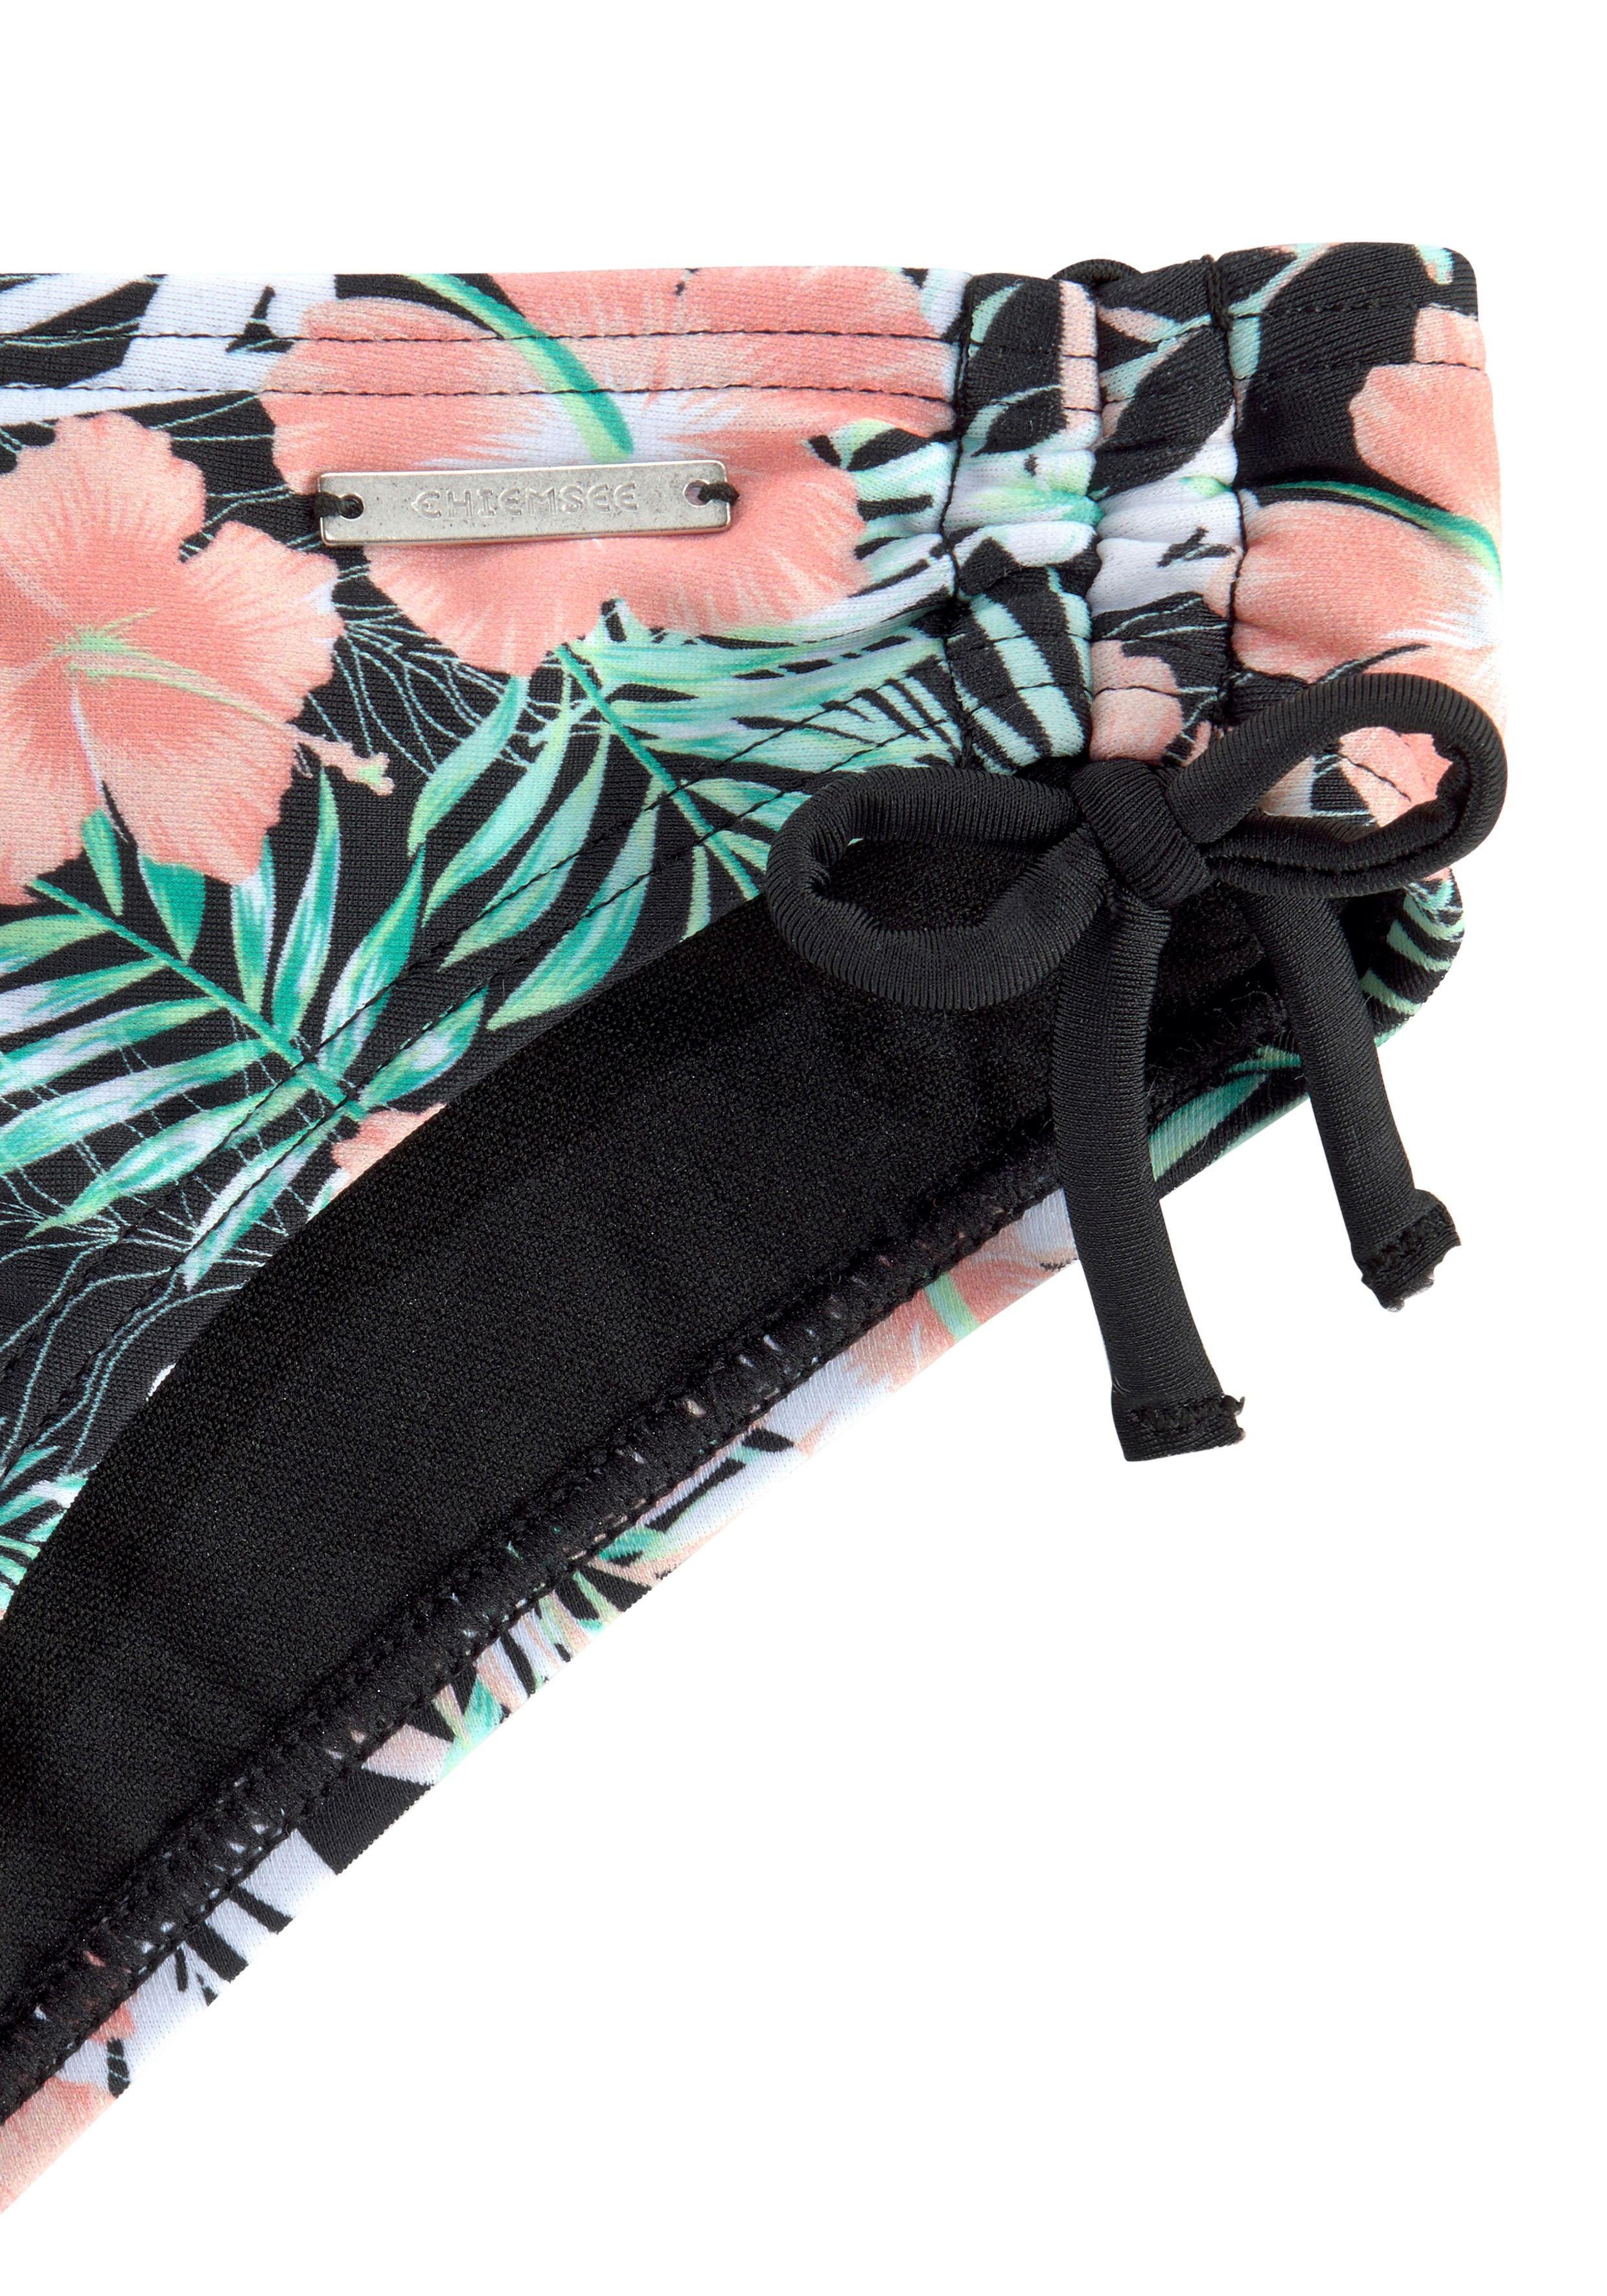 Chiemsee Triangel-Bikini mit floralem Design